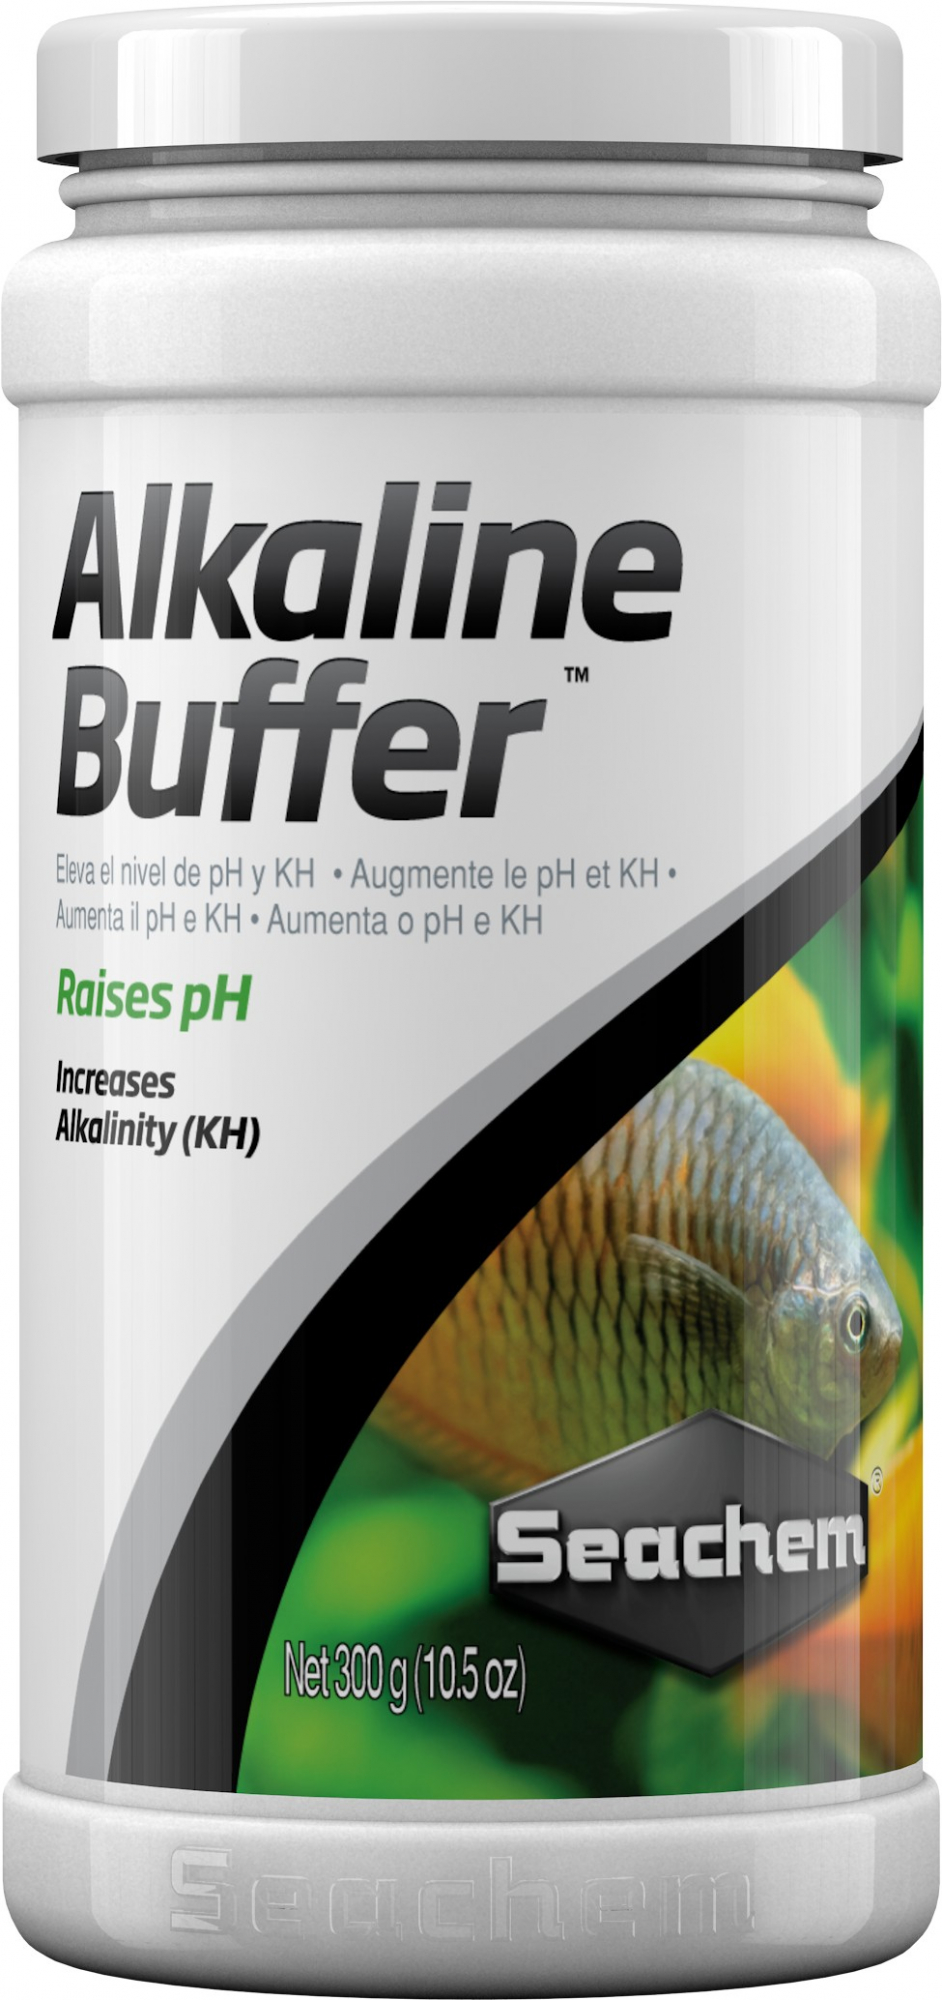 Alkaline Buffer - SEACHEM - aumento PH